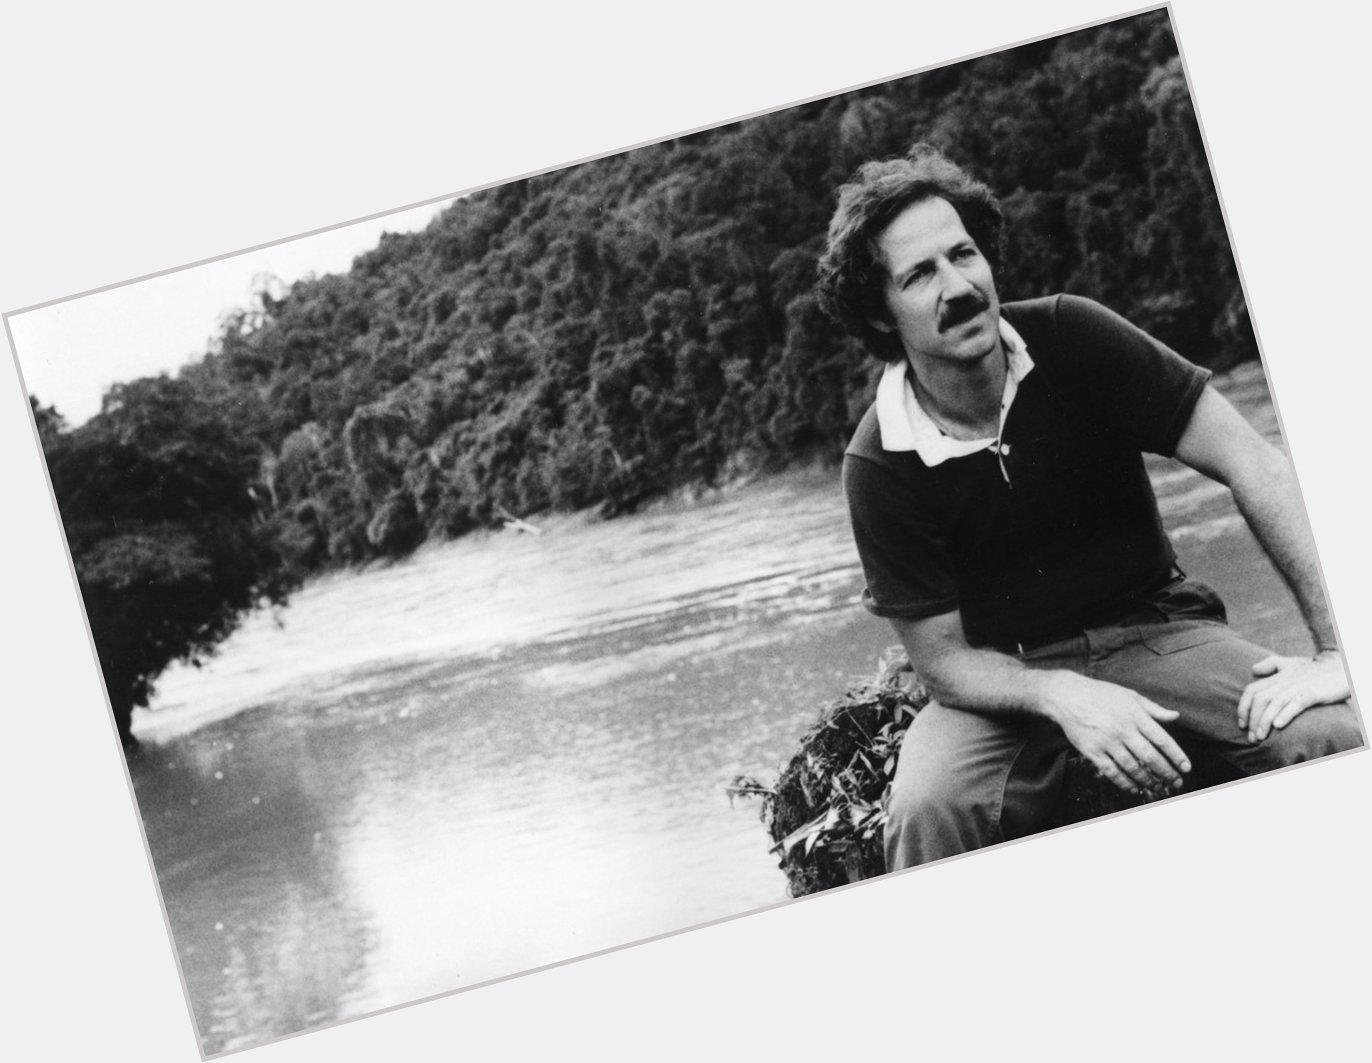 Happy Birthday, Werner Herzog! Born 5 September 1942 in Munich, Germany 